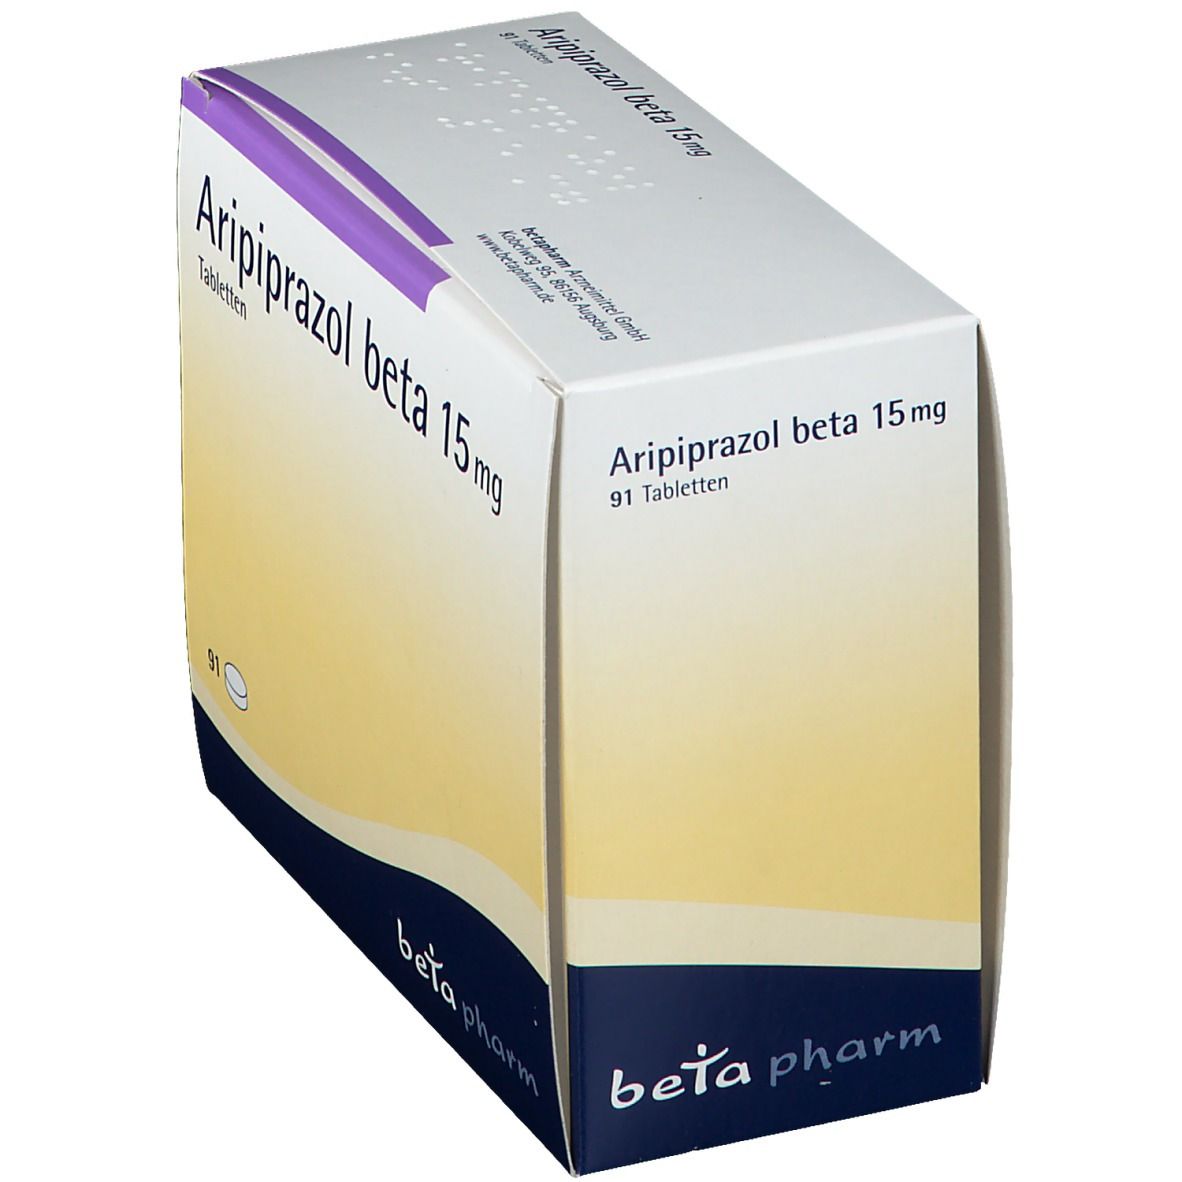 Aripiprazol beta 15 mg